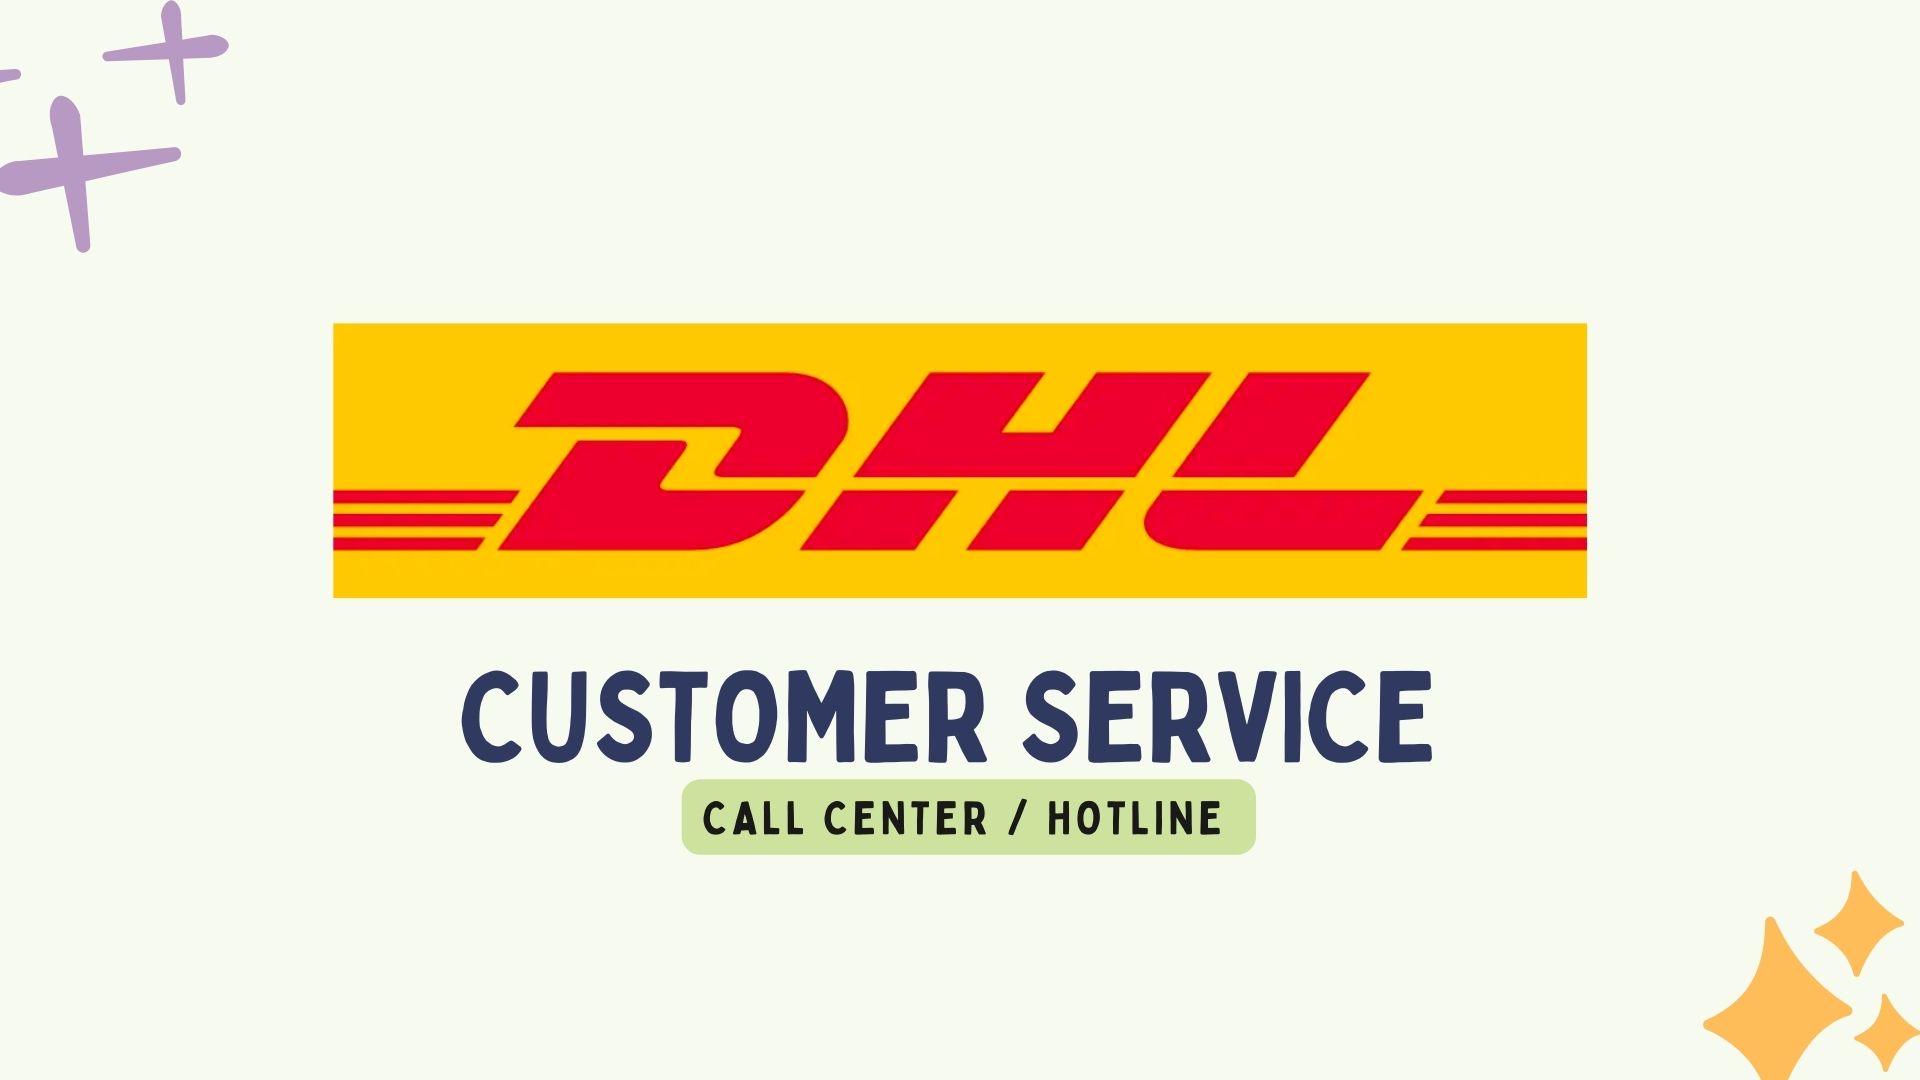 DHL Express Customer Service